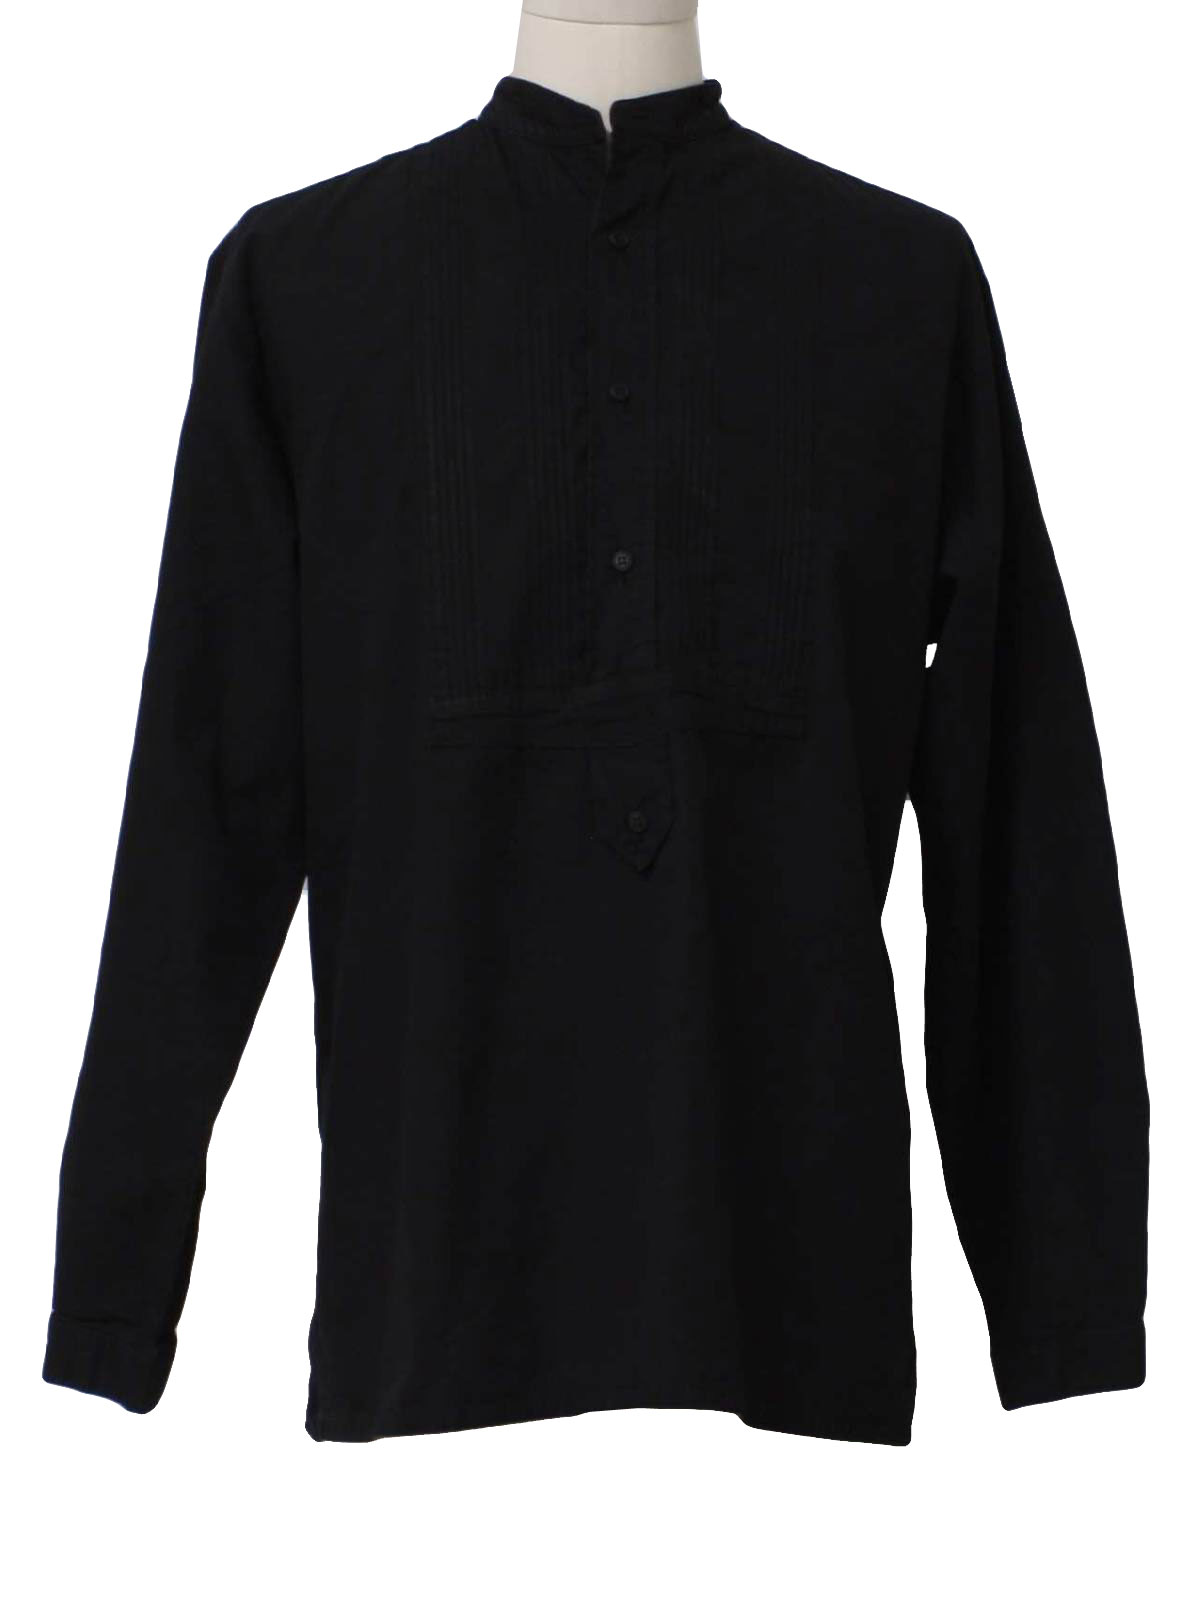 Western Shirt: 90s -Wah Maker True West- Mens Late 1800s style black ...